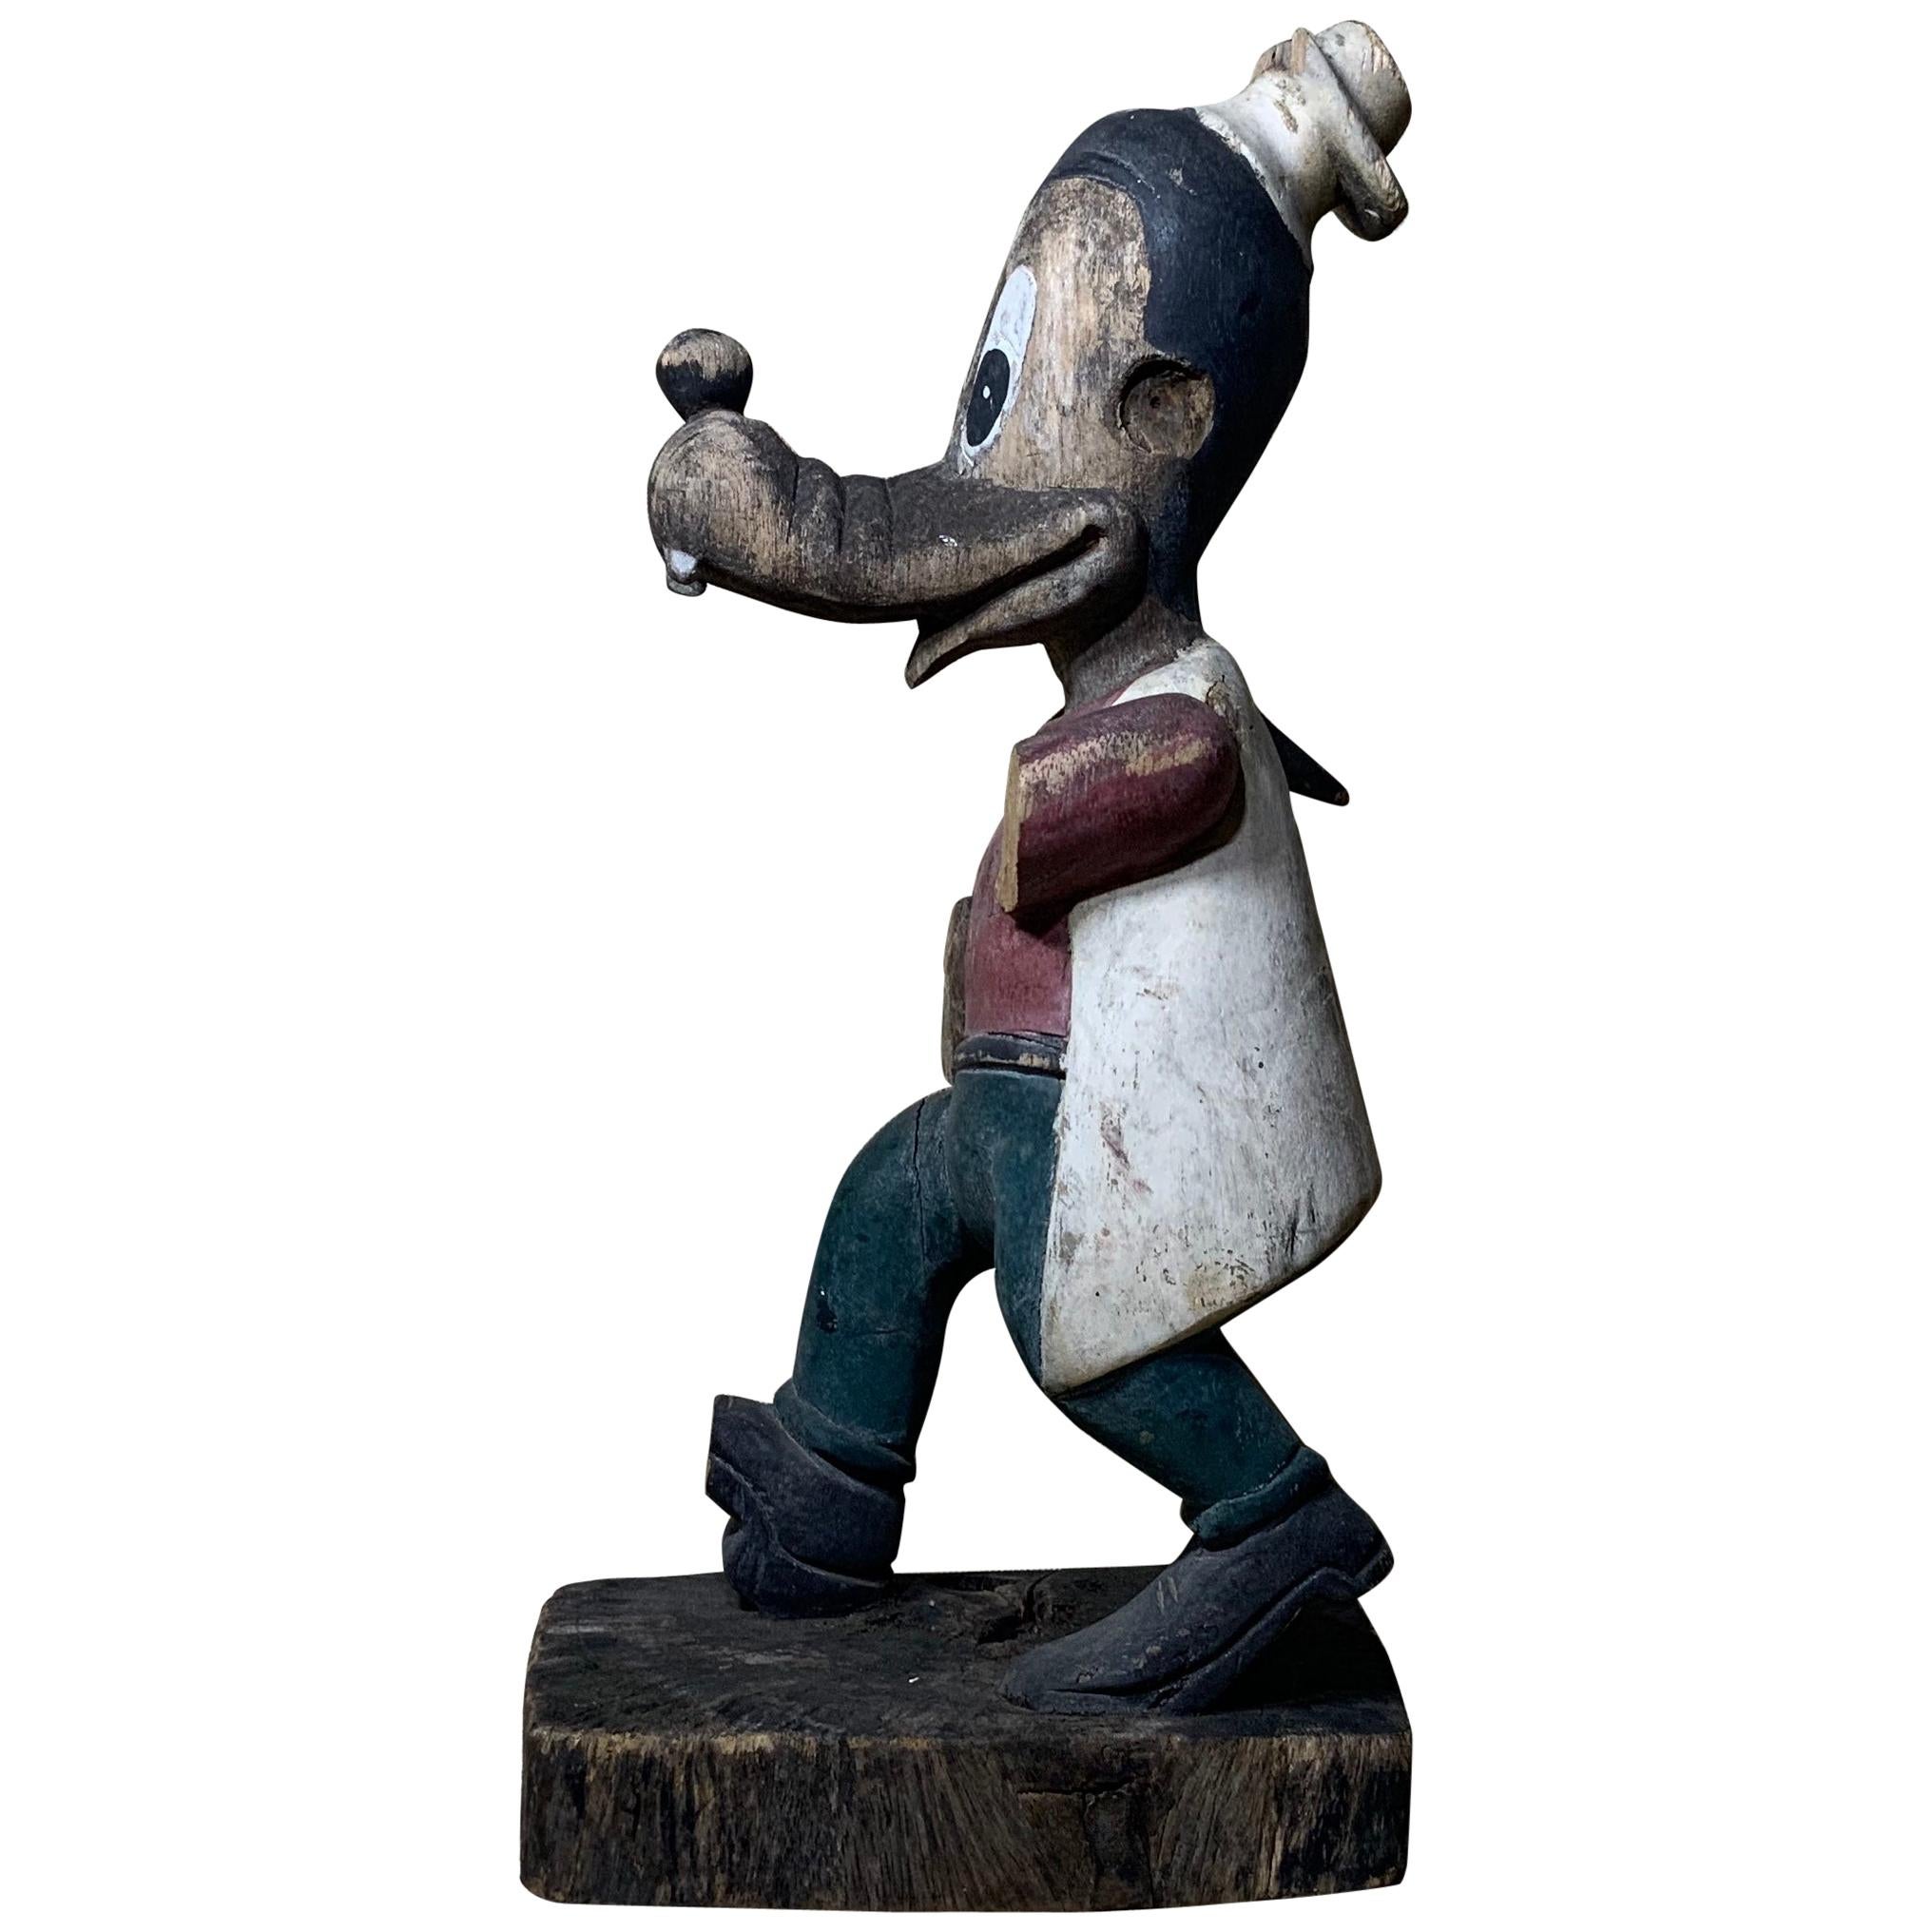 1950s Wooden Disney Goofy Mouse Sculpture